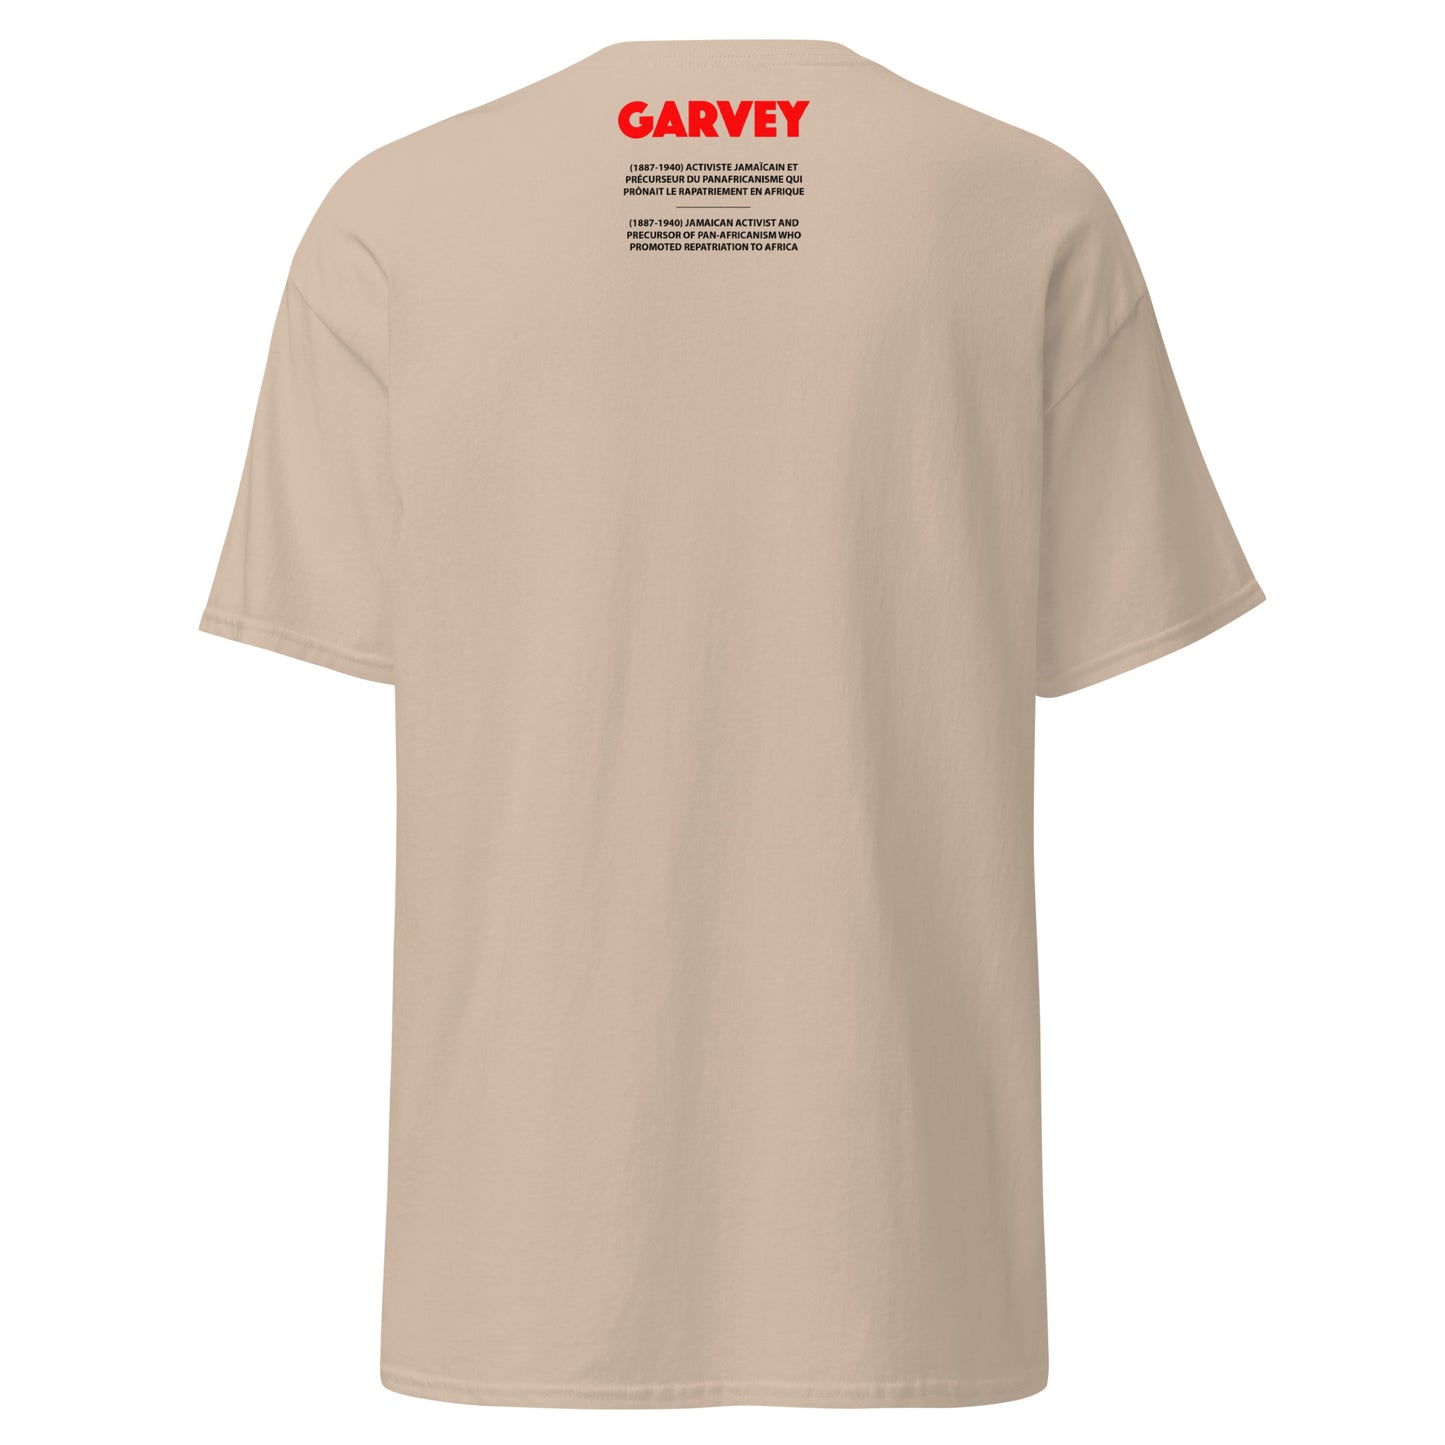 GARVEY (T-shirt)